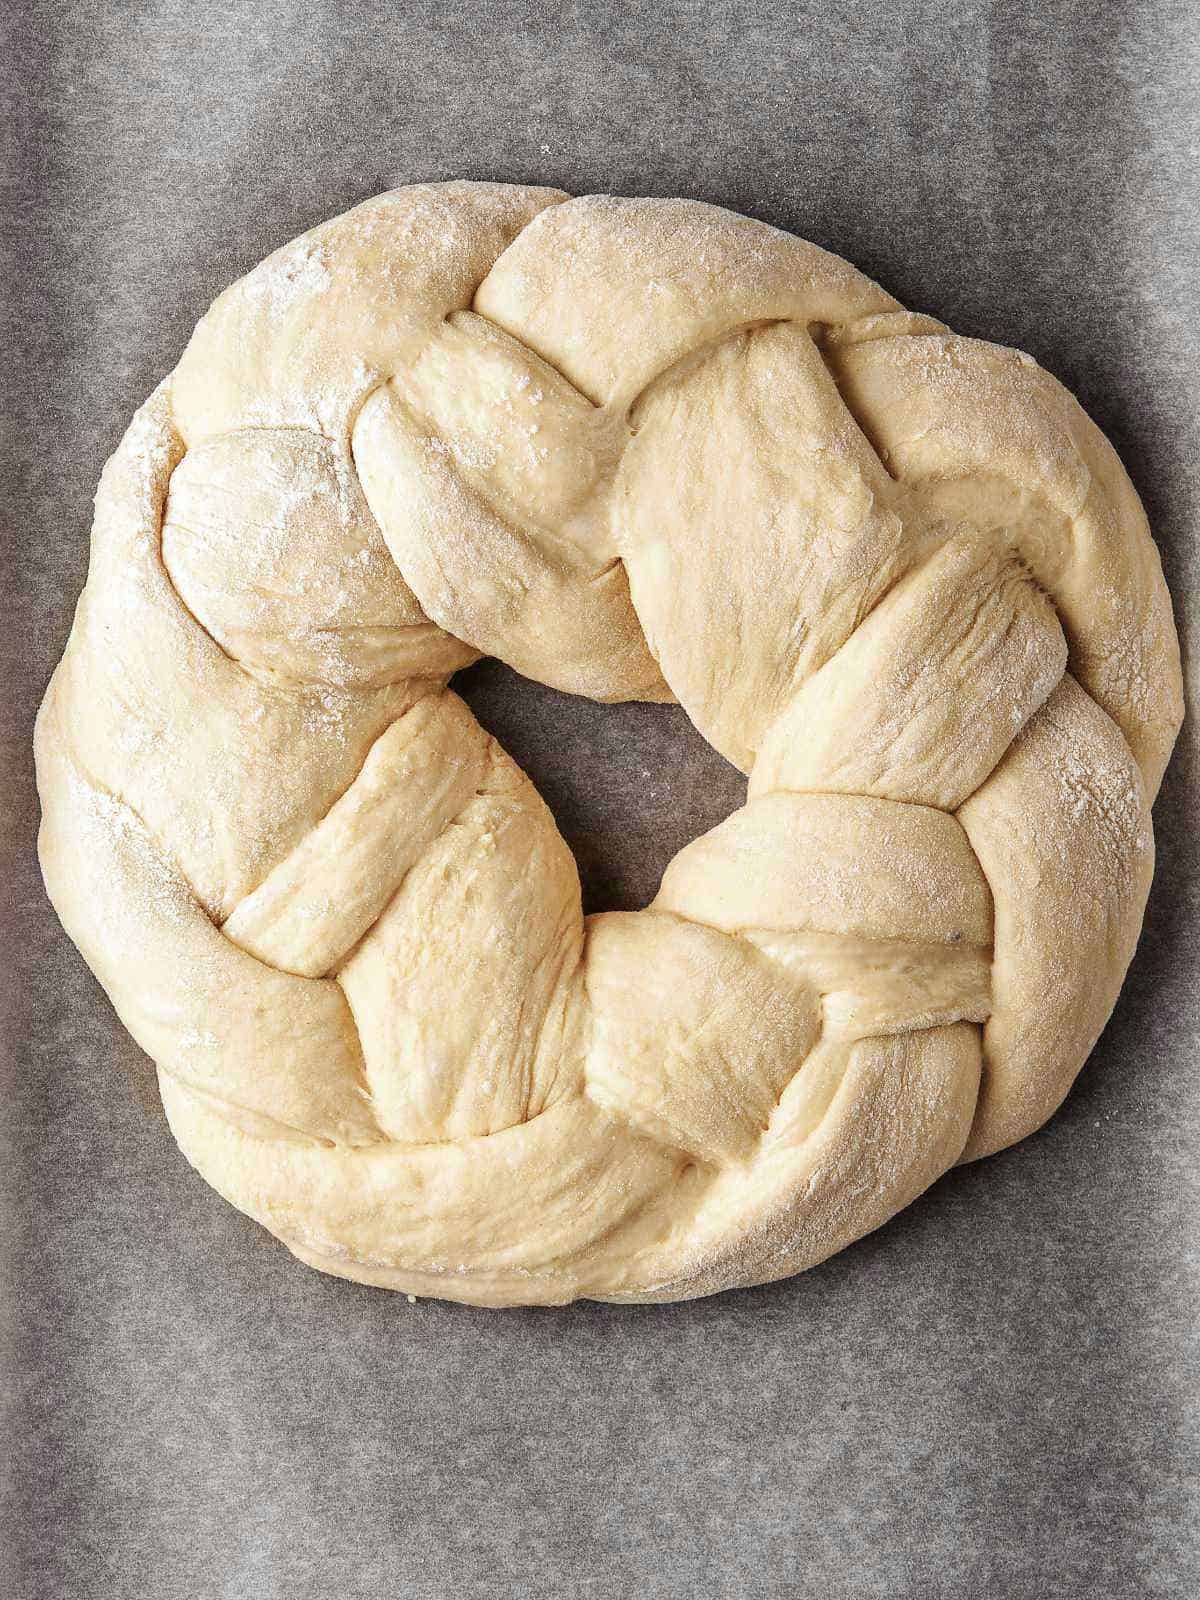 Preparation of the round braided tsoureki bread.